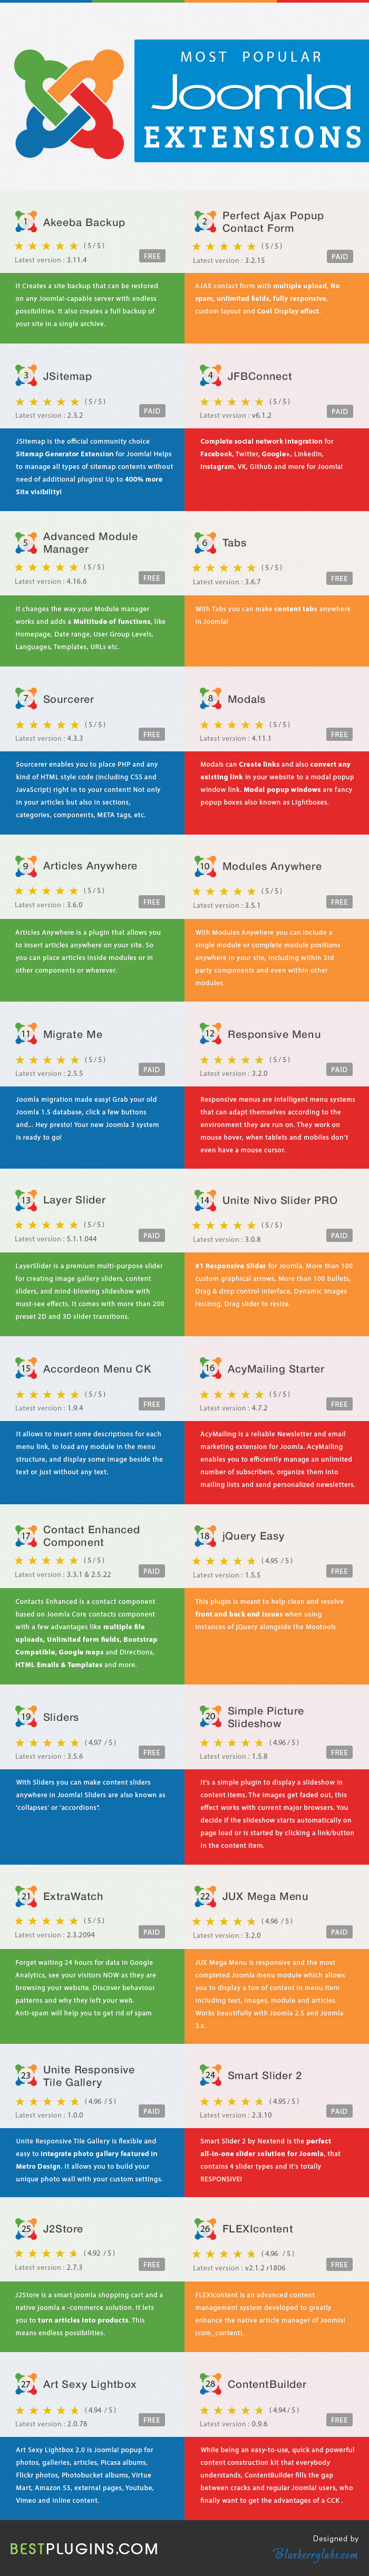 most popular joomla extensions infographic